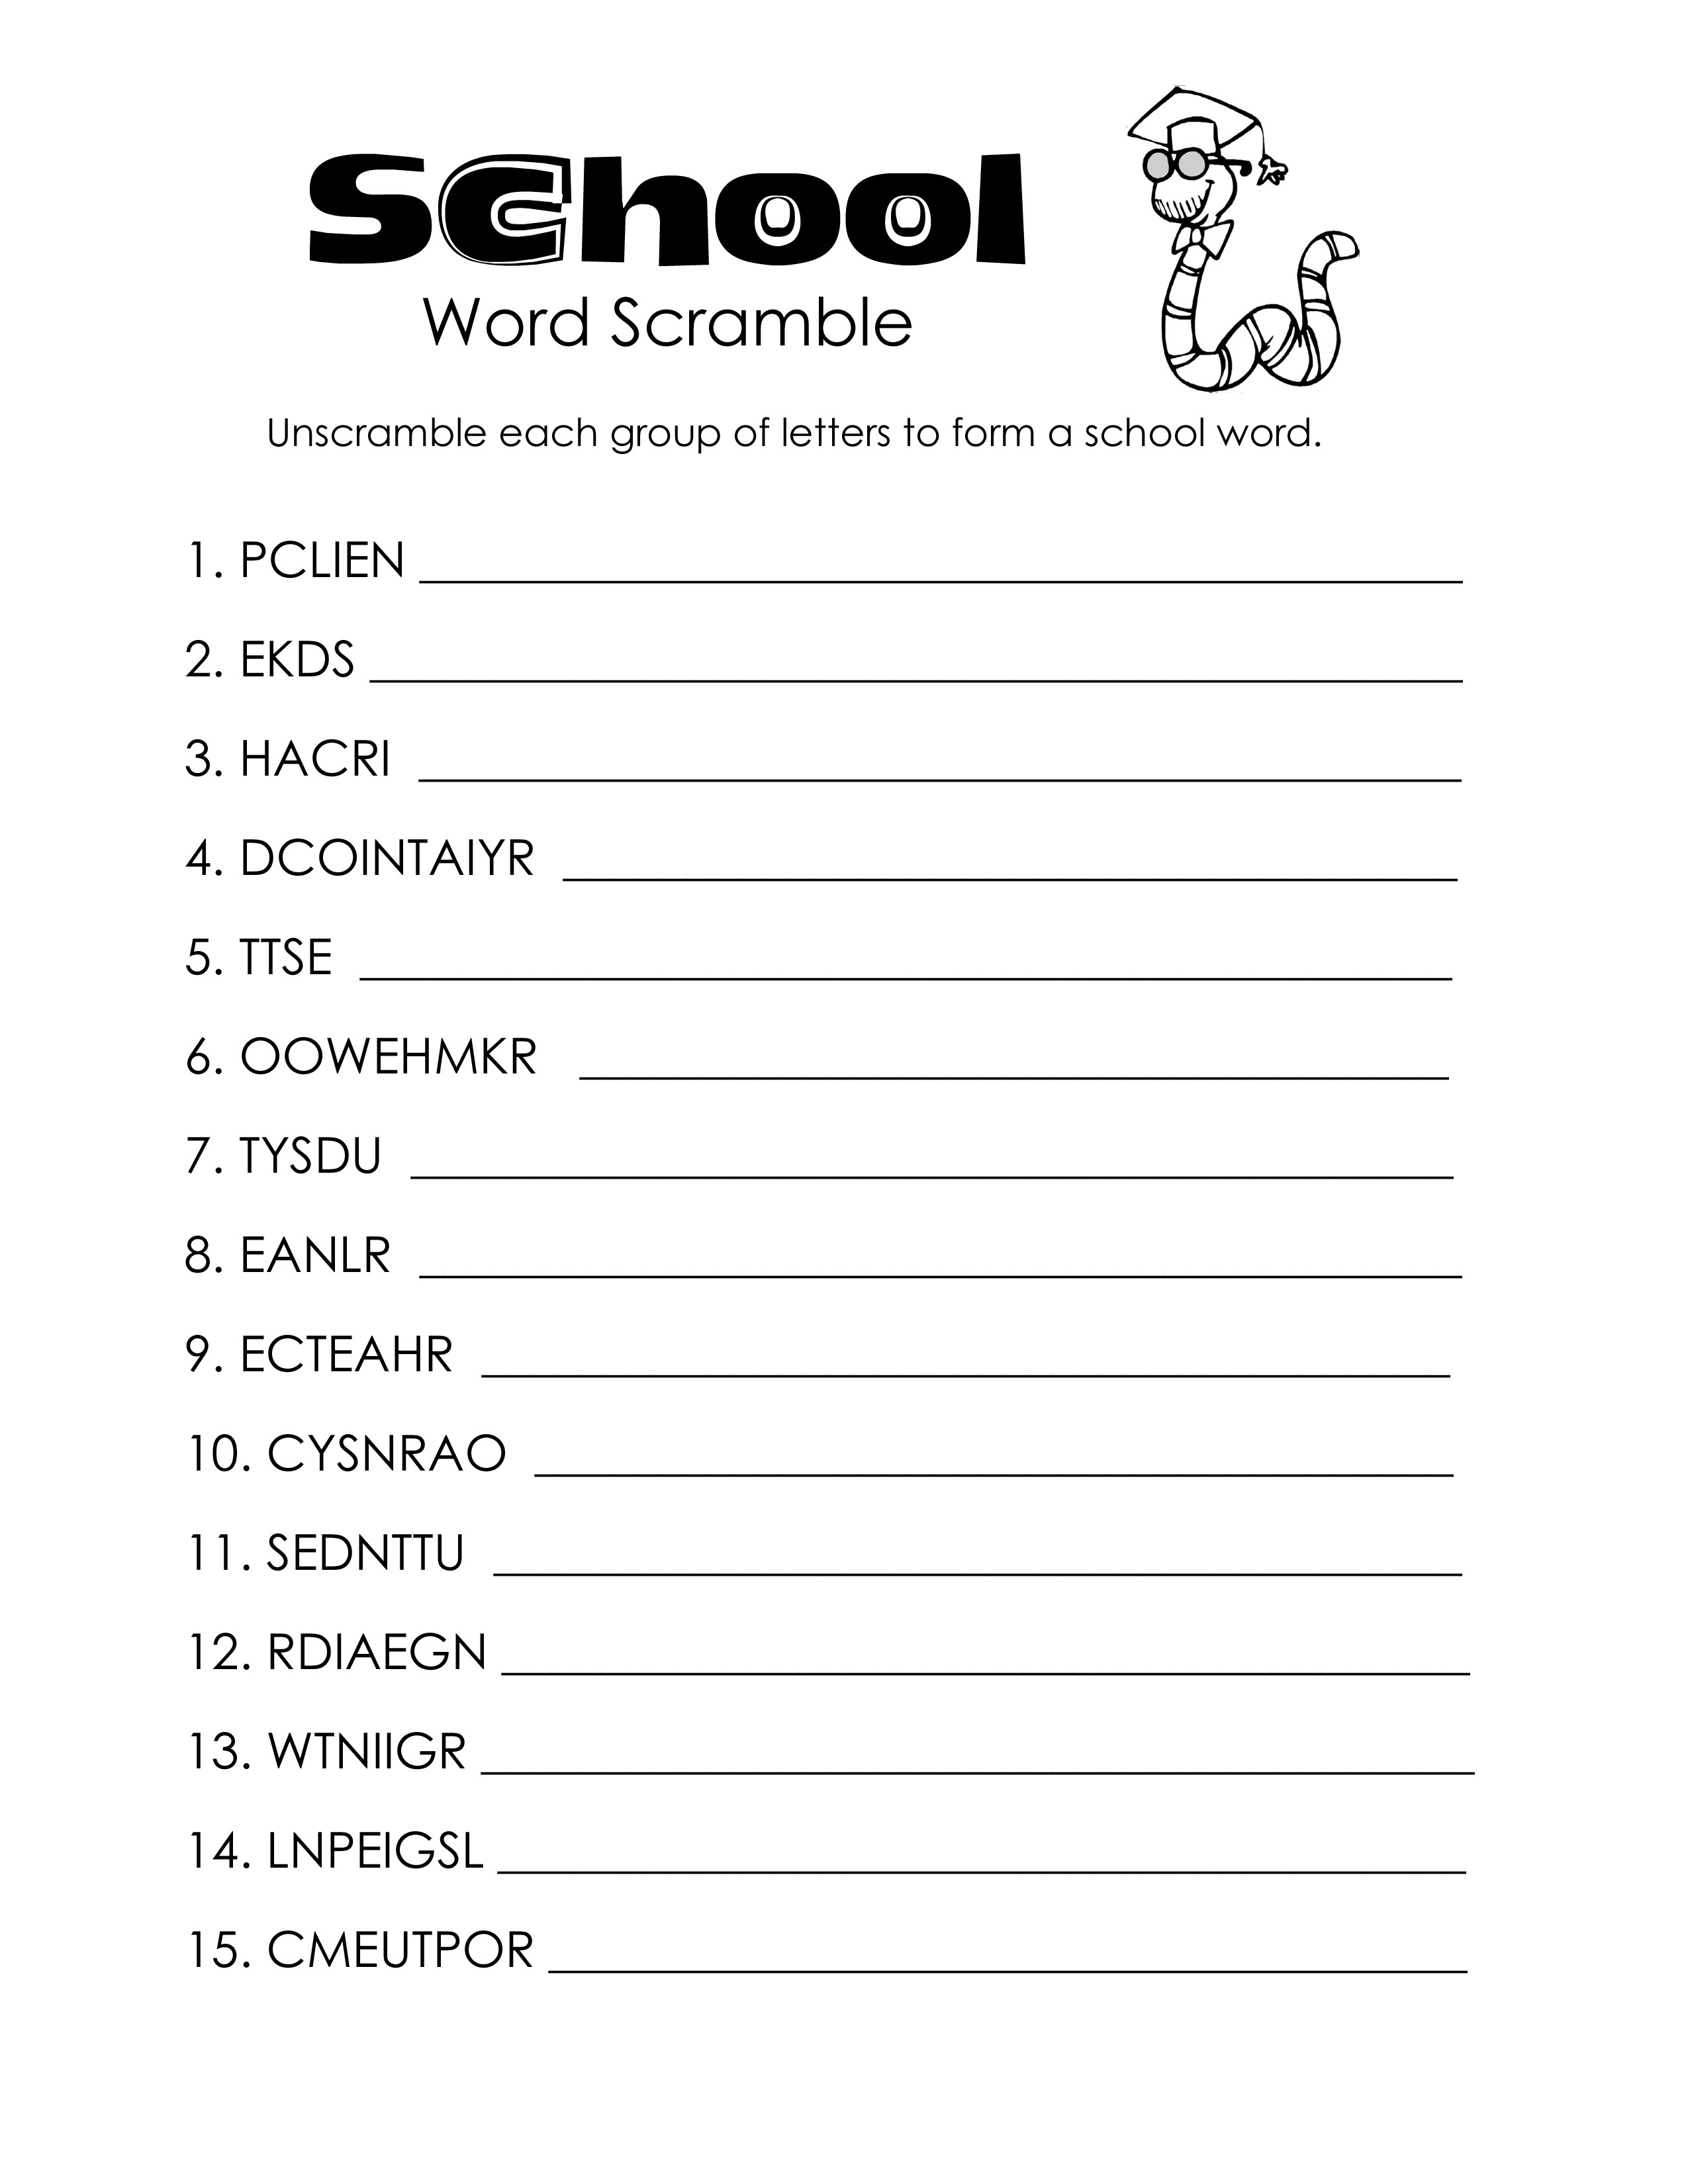 free-word-scramble-maker-printable-free-printable